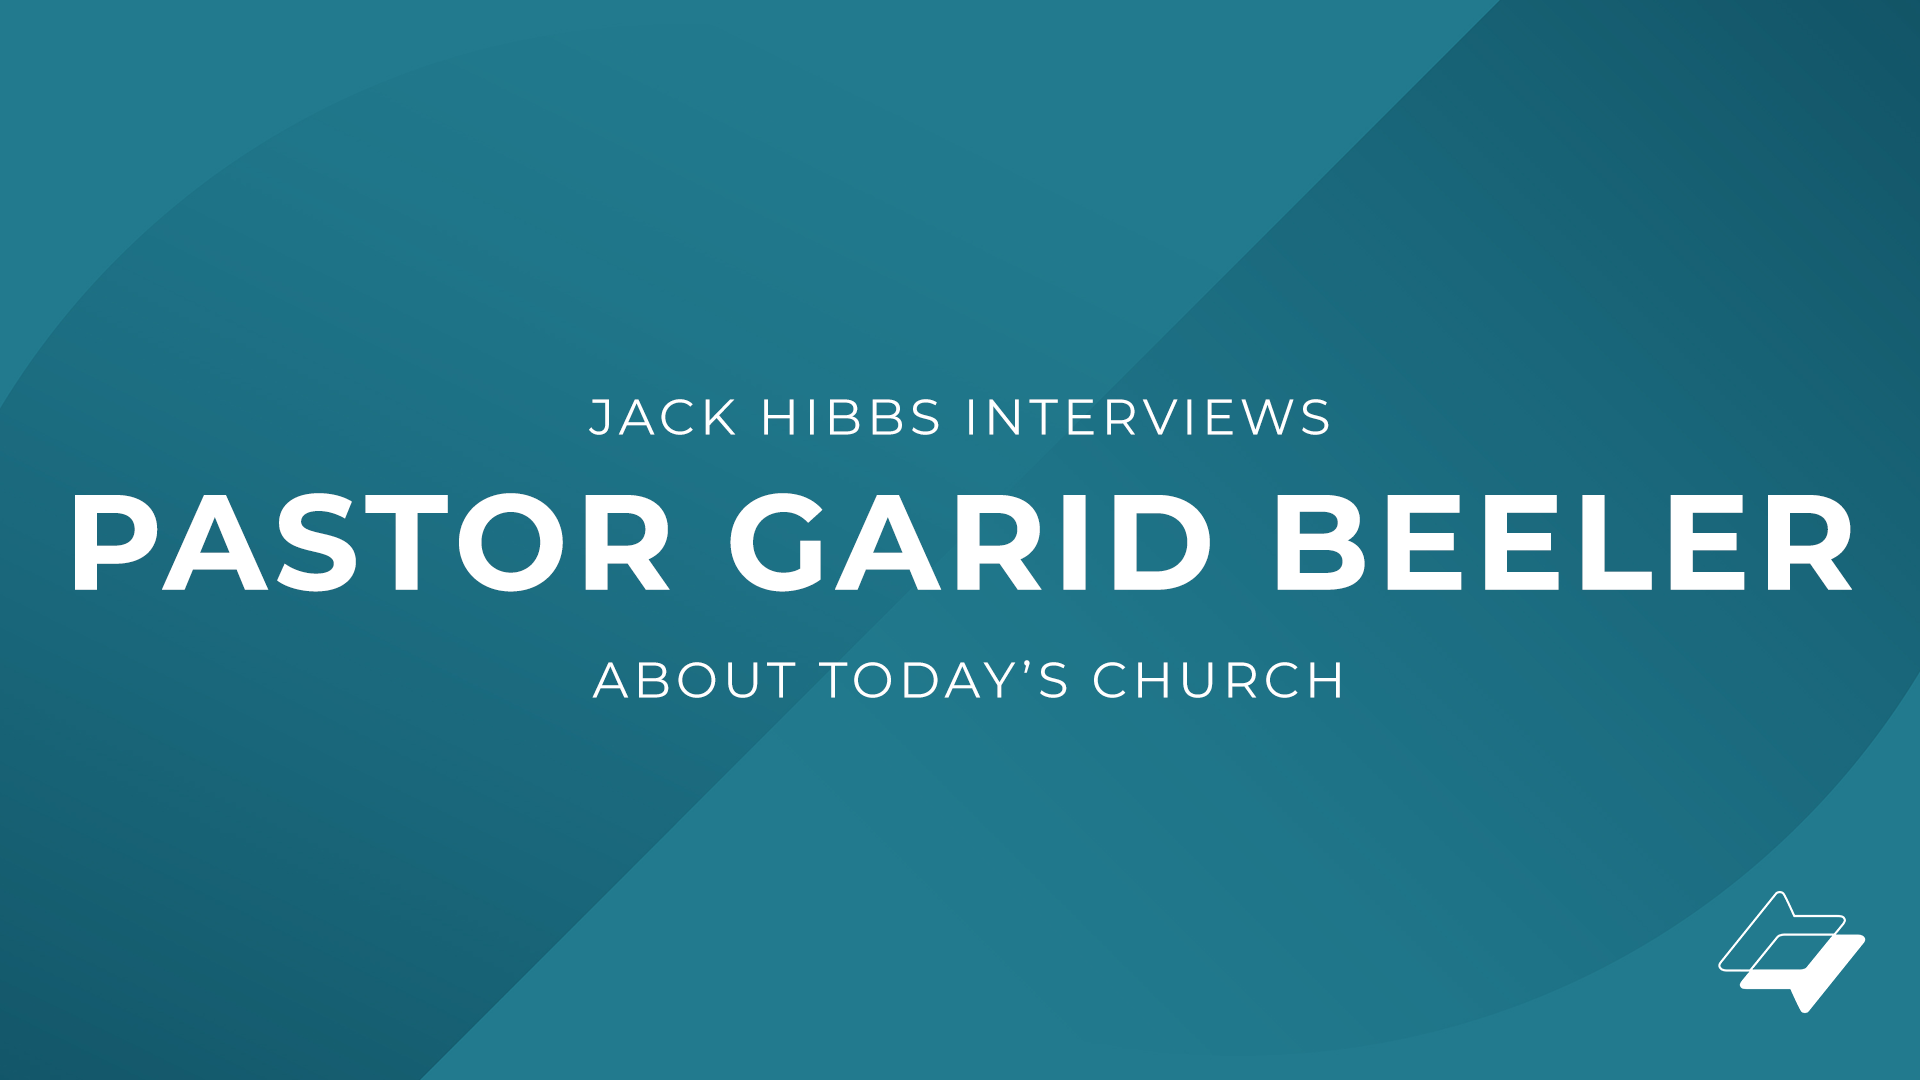 Jack Hibbs interviews Pastor Garid Beeler about today’s church